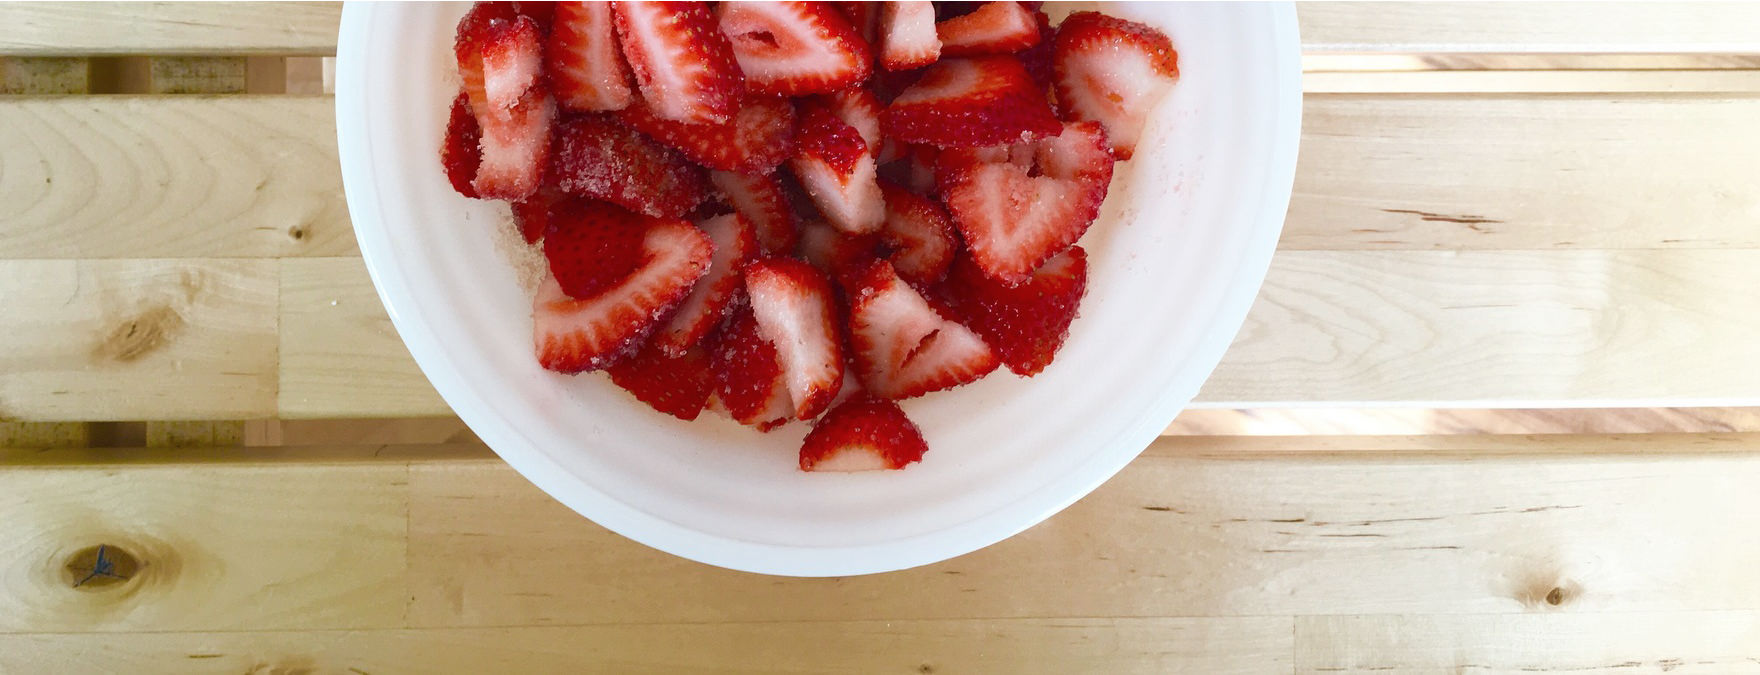 Chopped strawberries